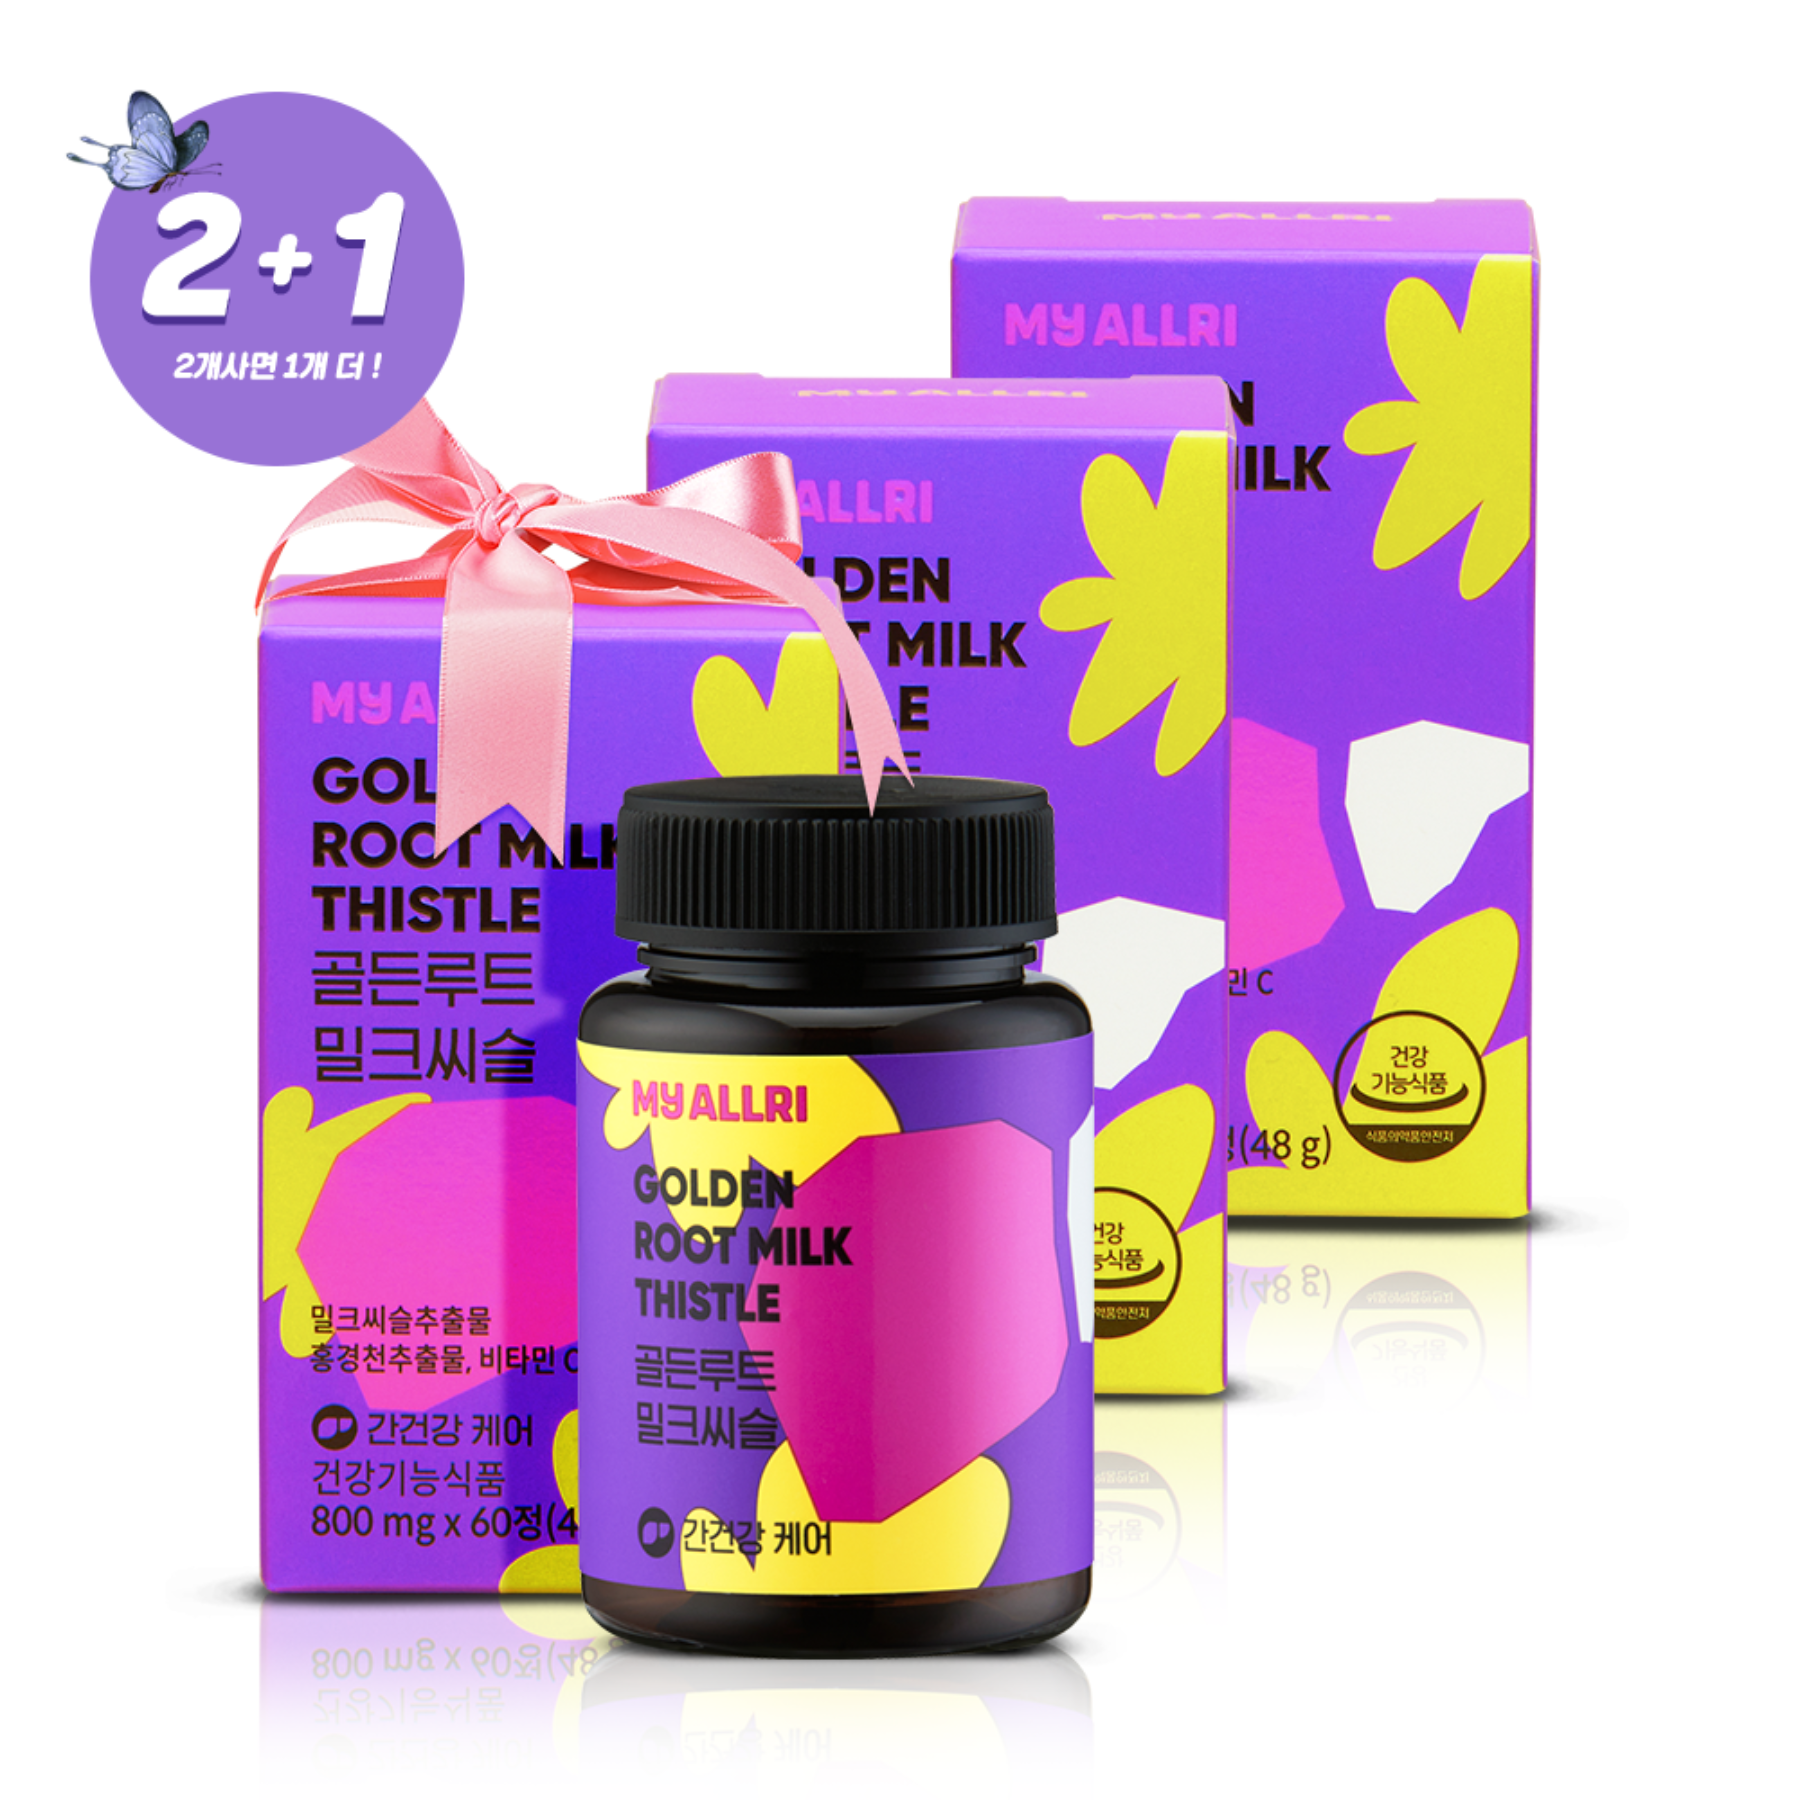 ★2+1★ Golden Root Milk Thistle 3pcs for 6 months